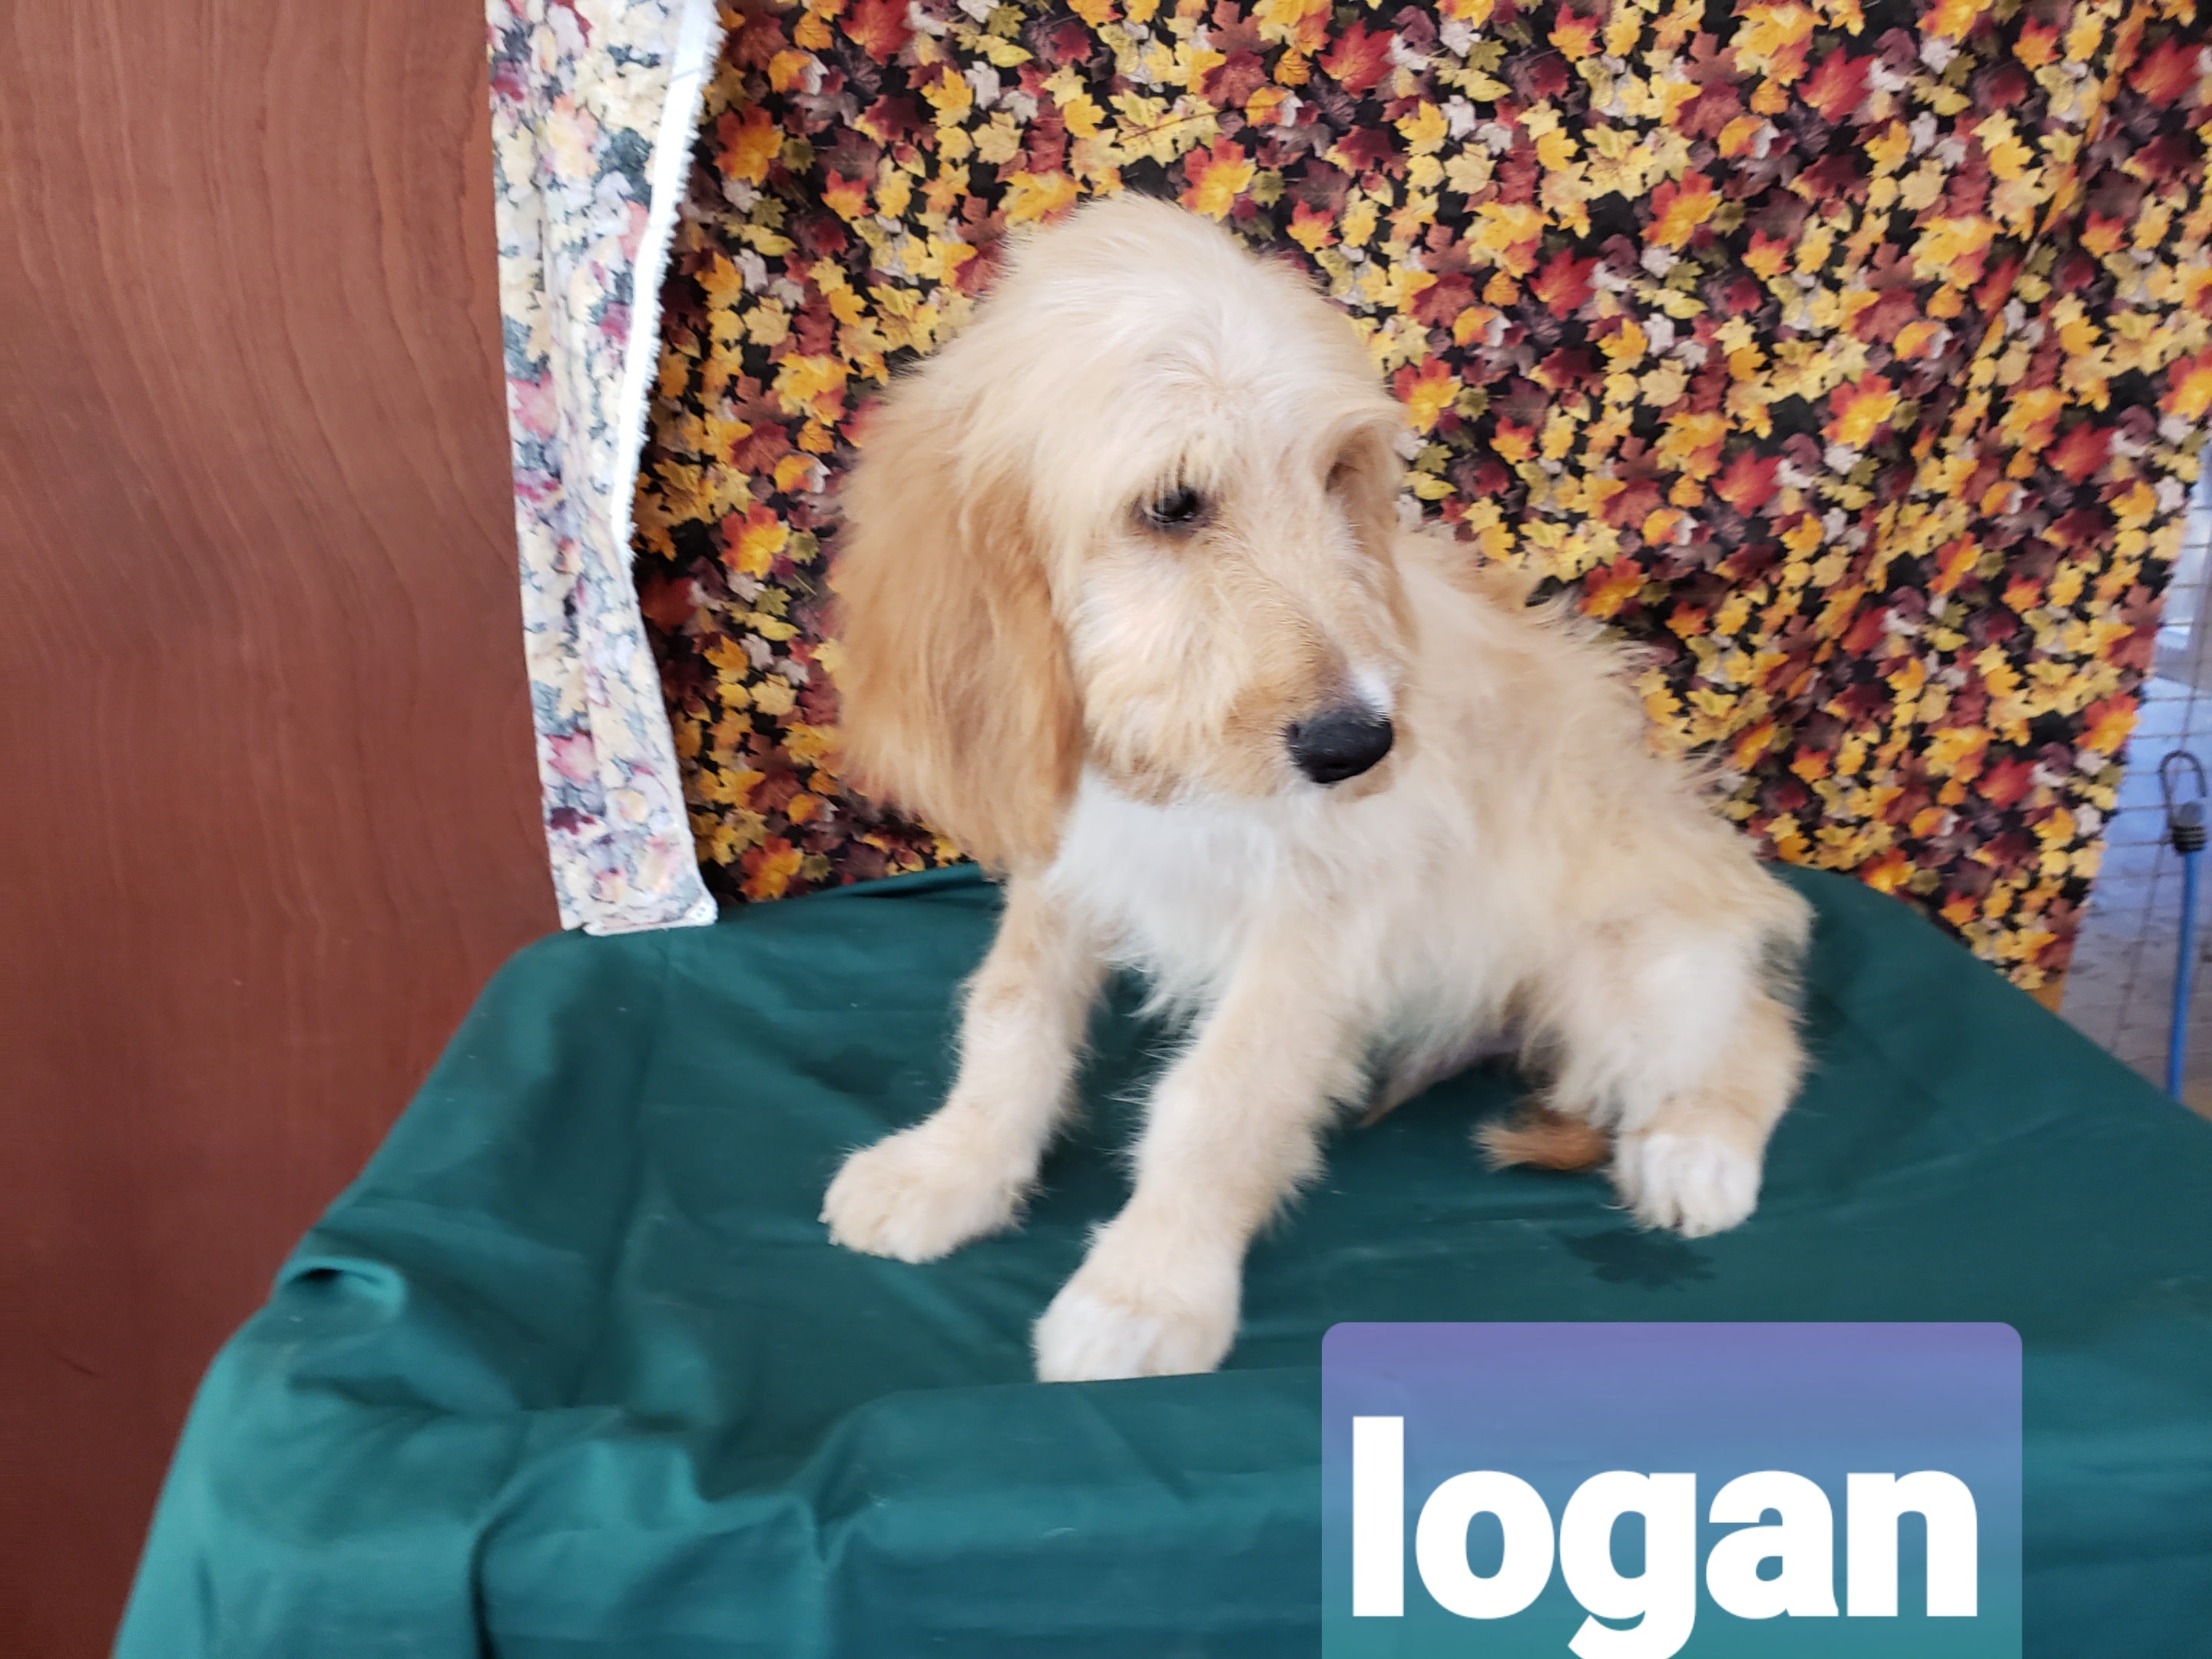 Logan the Goldendoodle